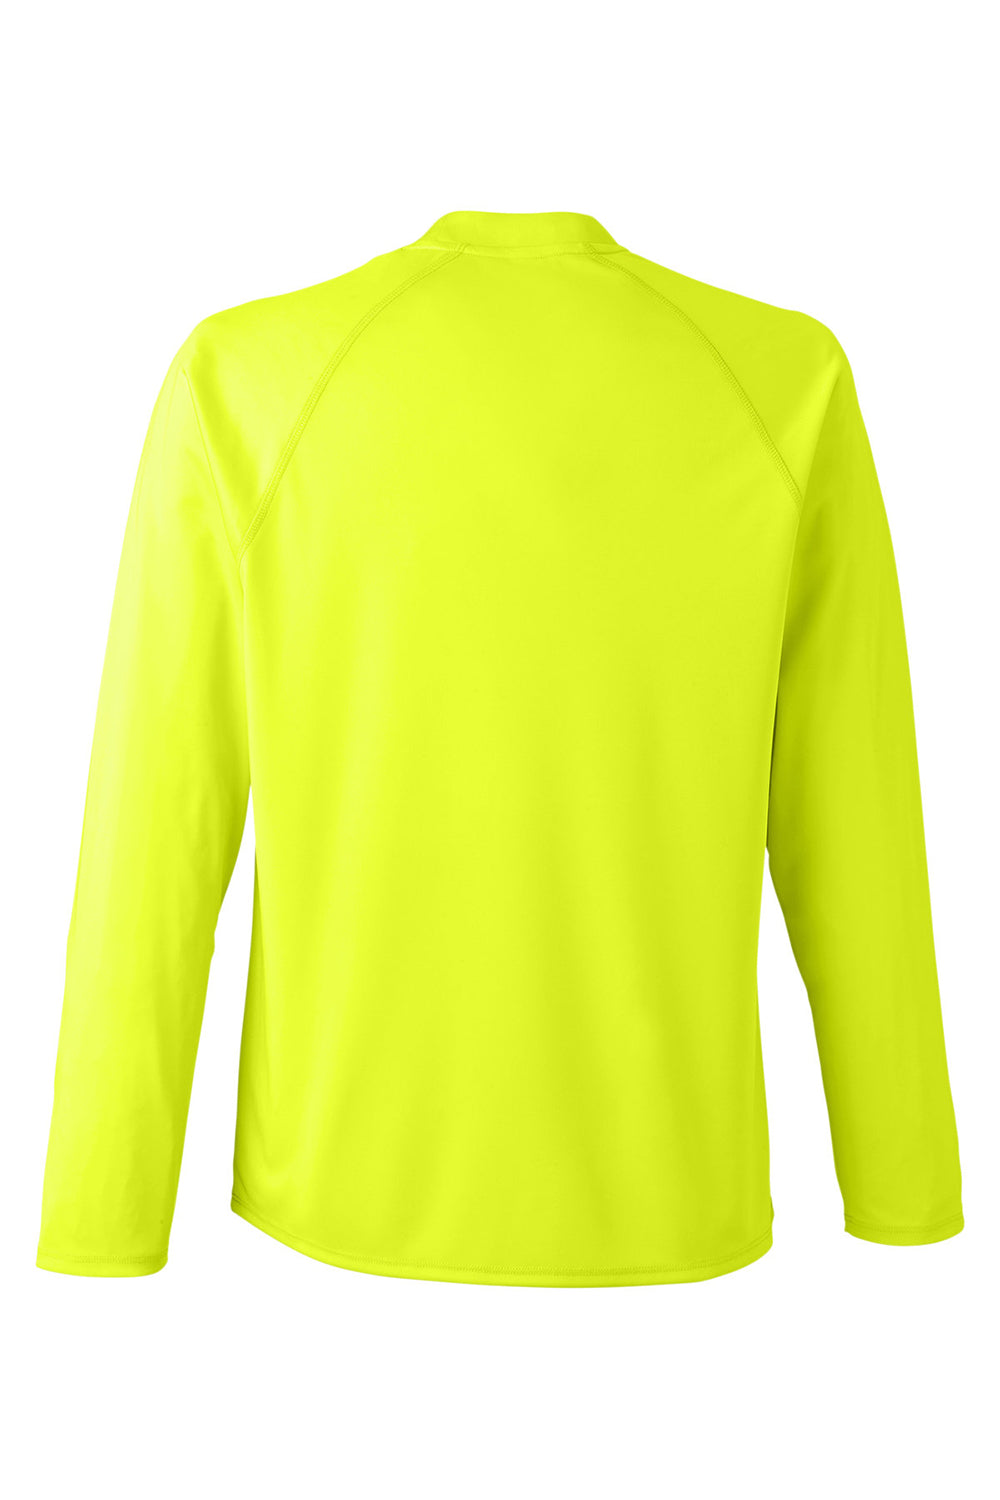 Core 365 CE110 Mens Ultra MVP Raglan Long Sleeve T-Shirt Safety Yellow Flat Back